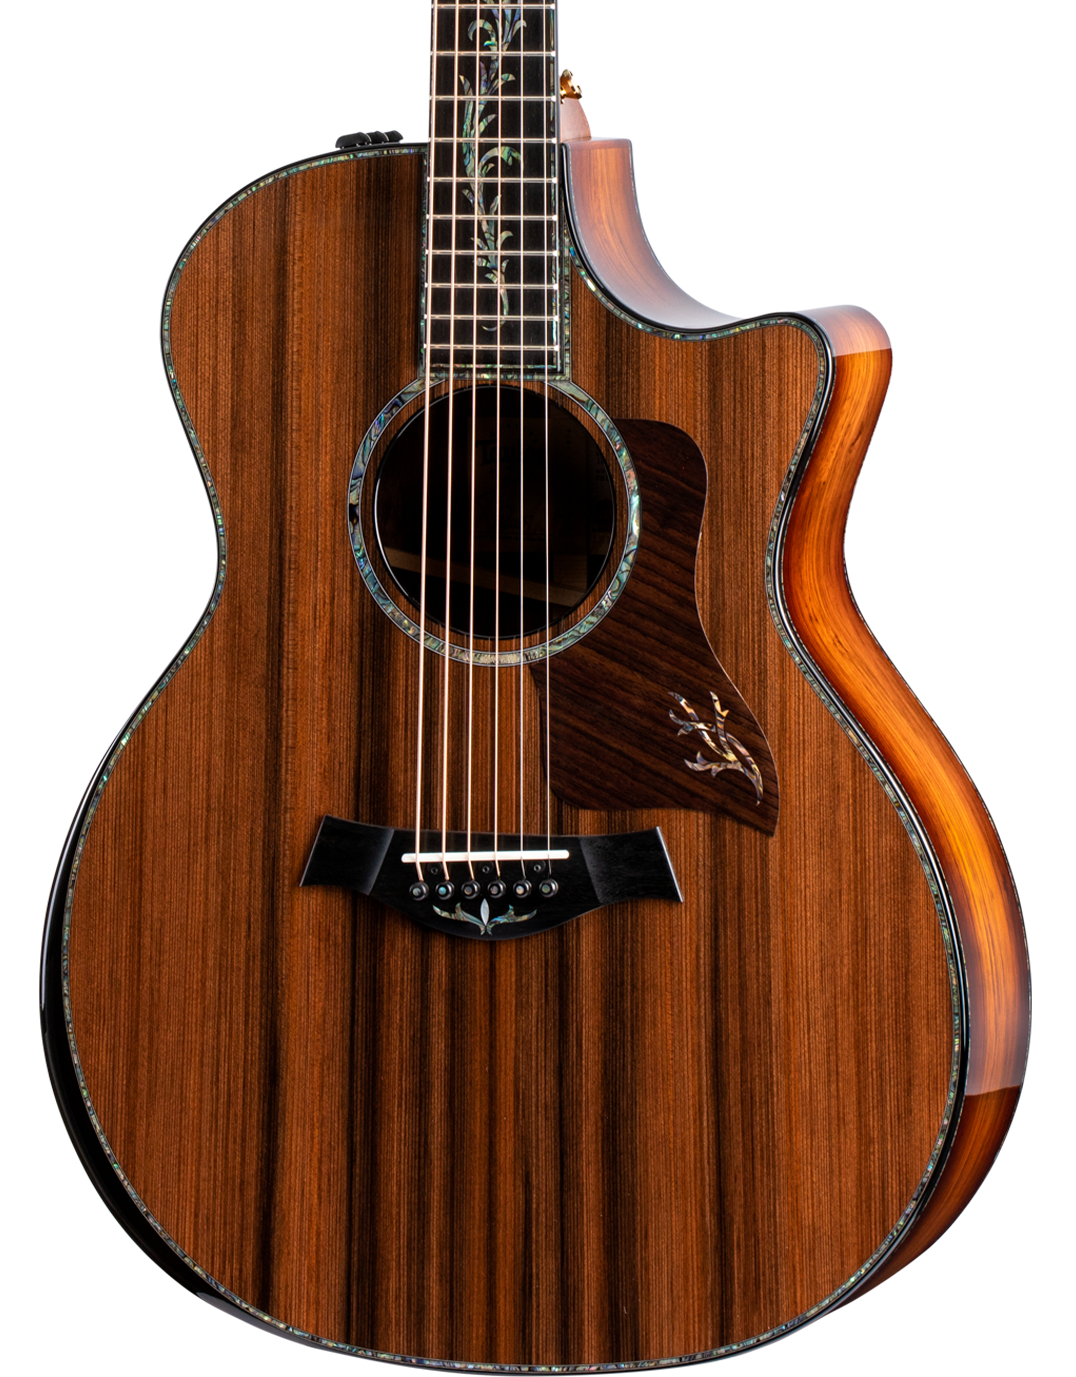 Guitar Solid Body, Cedar Wood Guitar